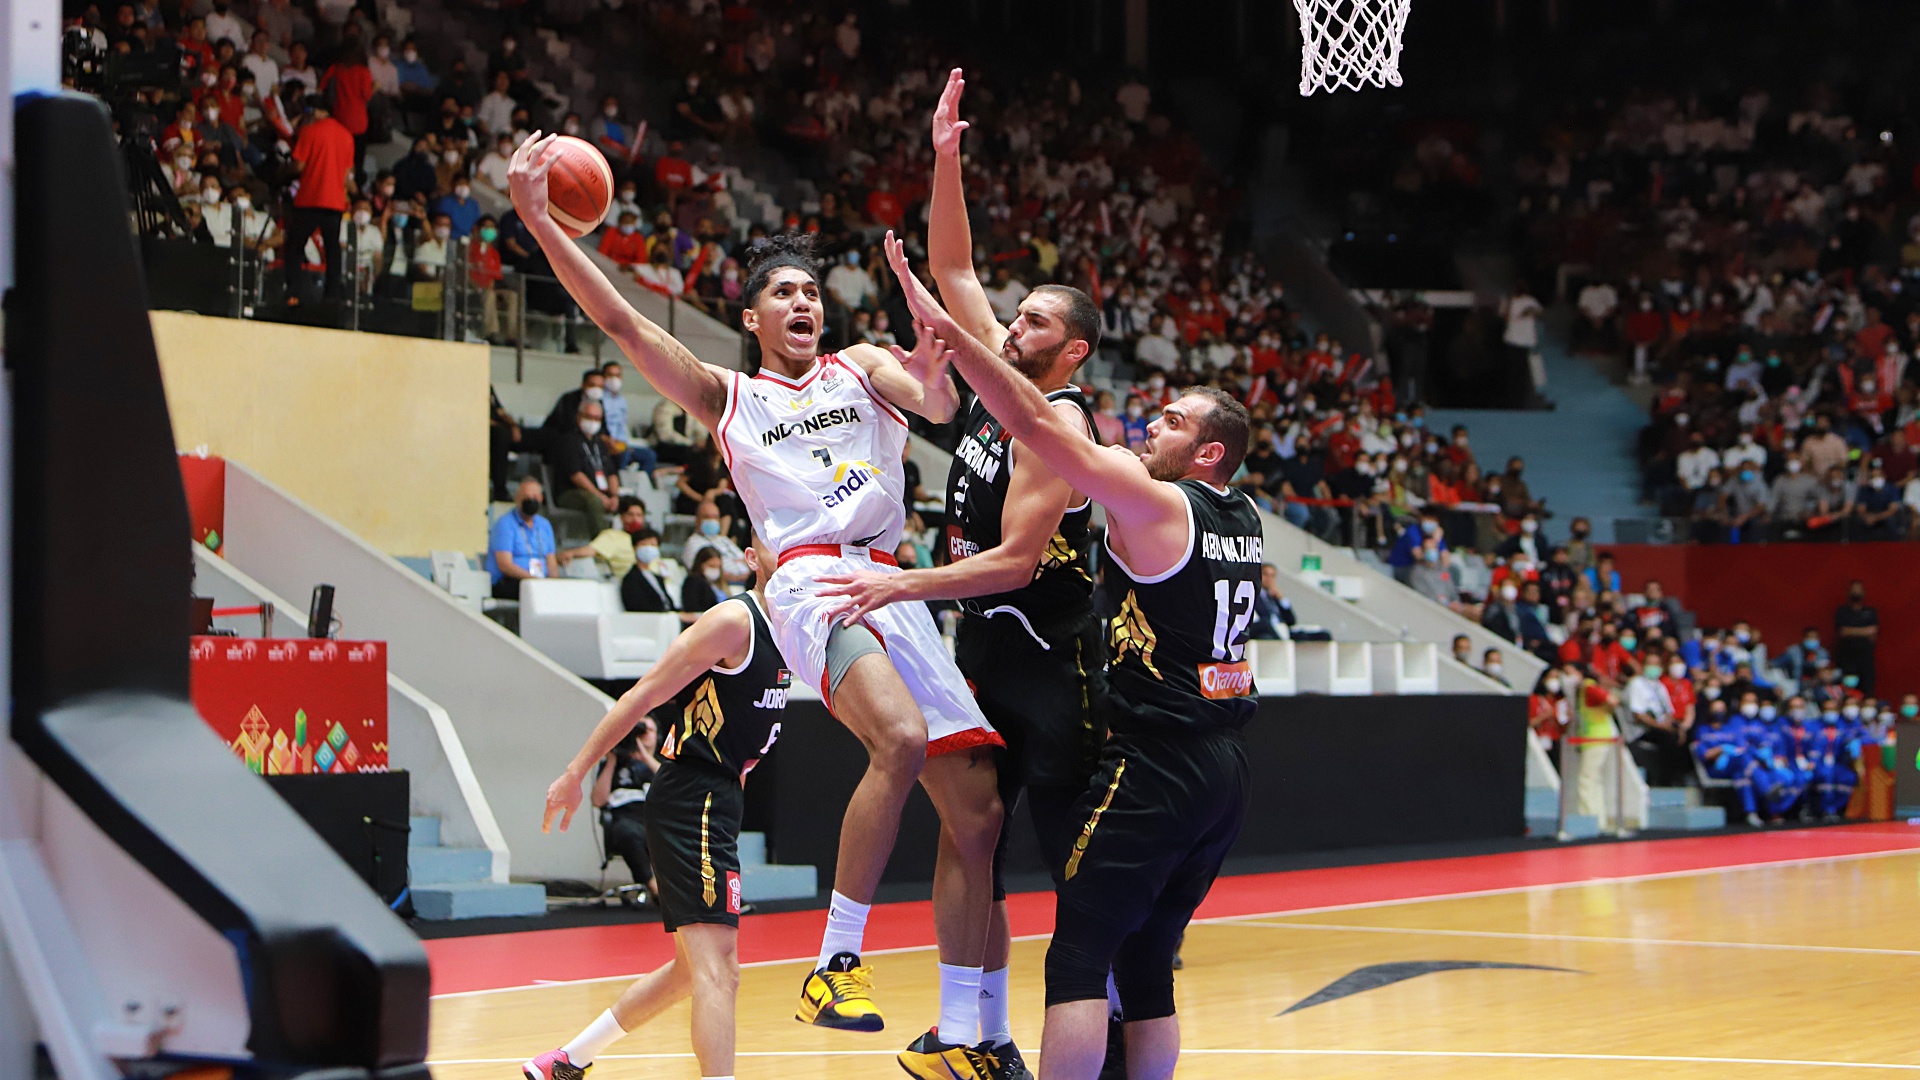 Piala Asia FIBA 2022: Aksi Heroik Derrick Michael, Sakit tapi Tetap Main